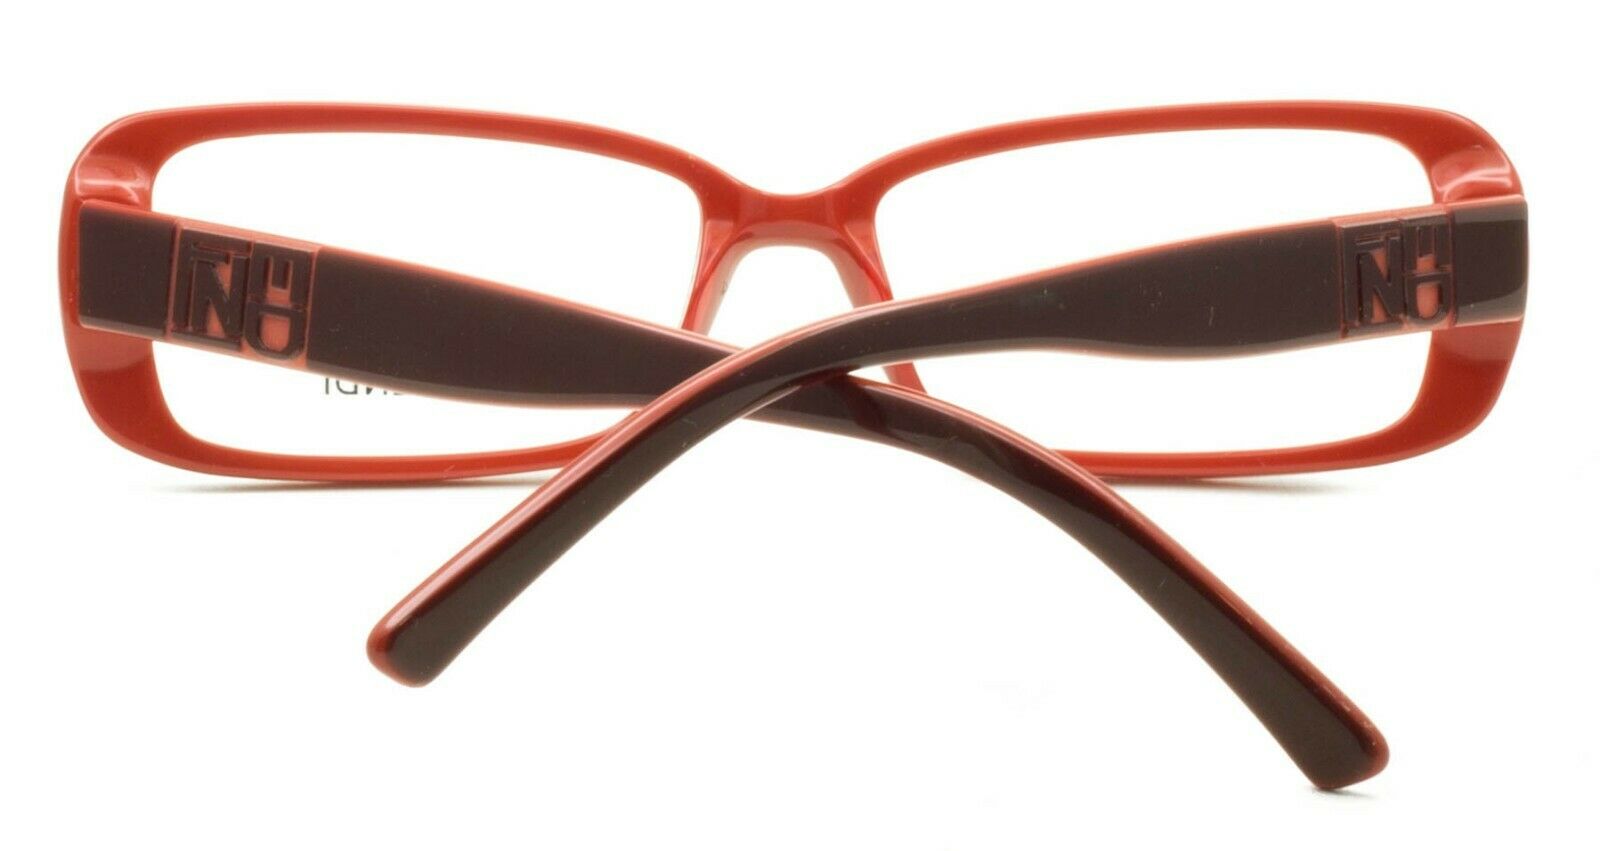 FENDI F768 603 53mm Eyewear RX Optical FRAMES Glasses Eyeglasses Italy -New BNIB